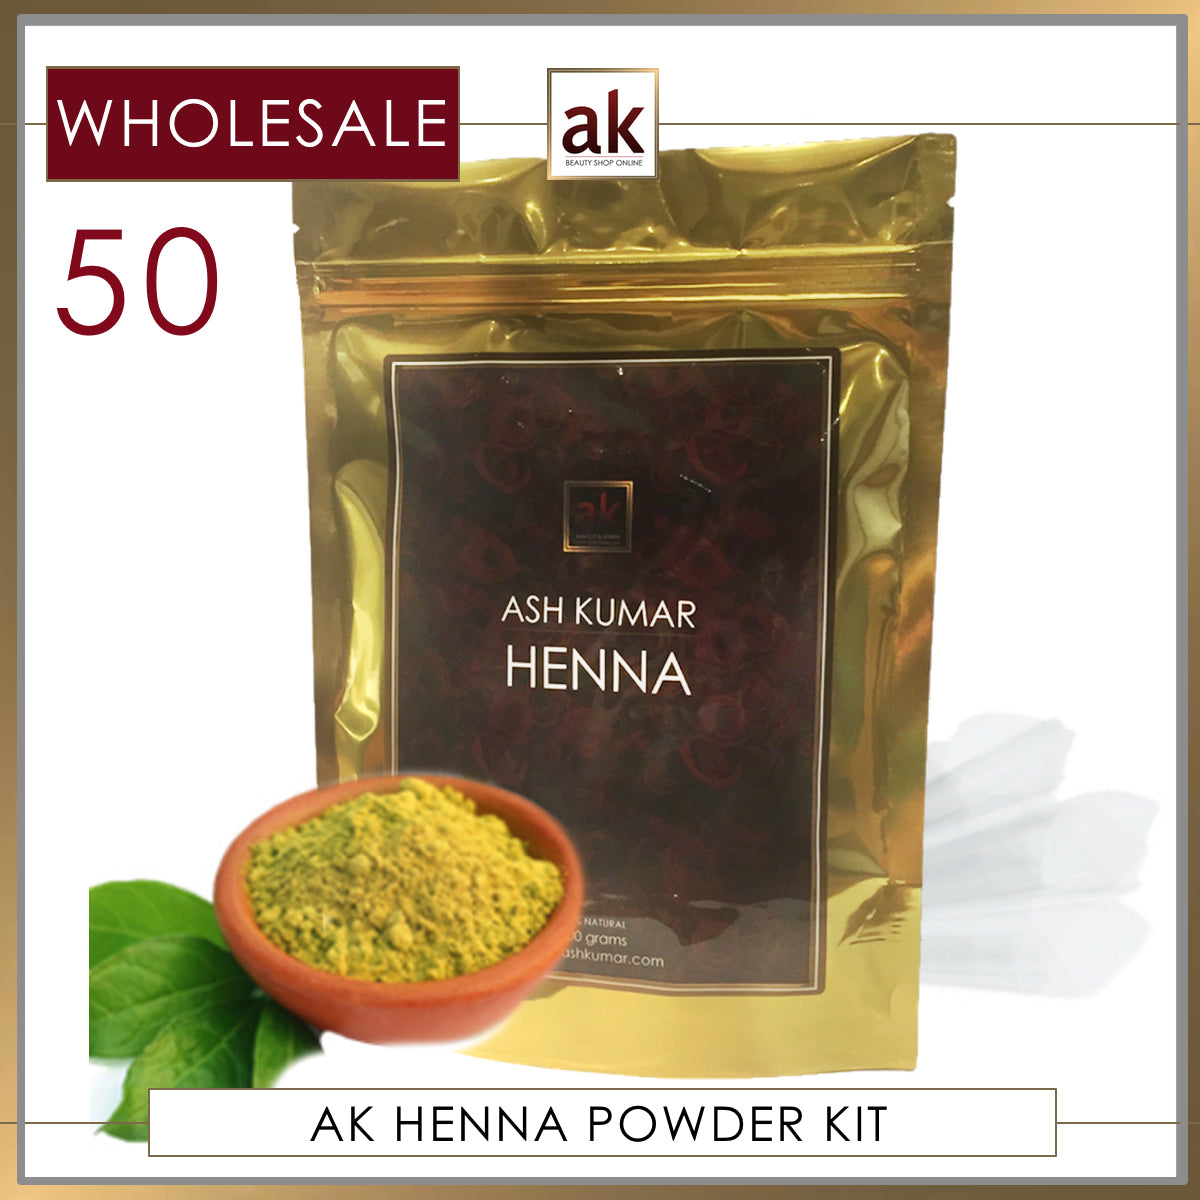 50 Ash Kumar Henna Powder Wholesale - Ash Kumar Products UK